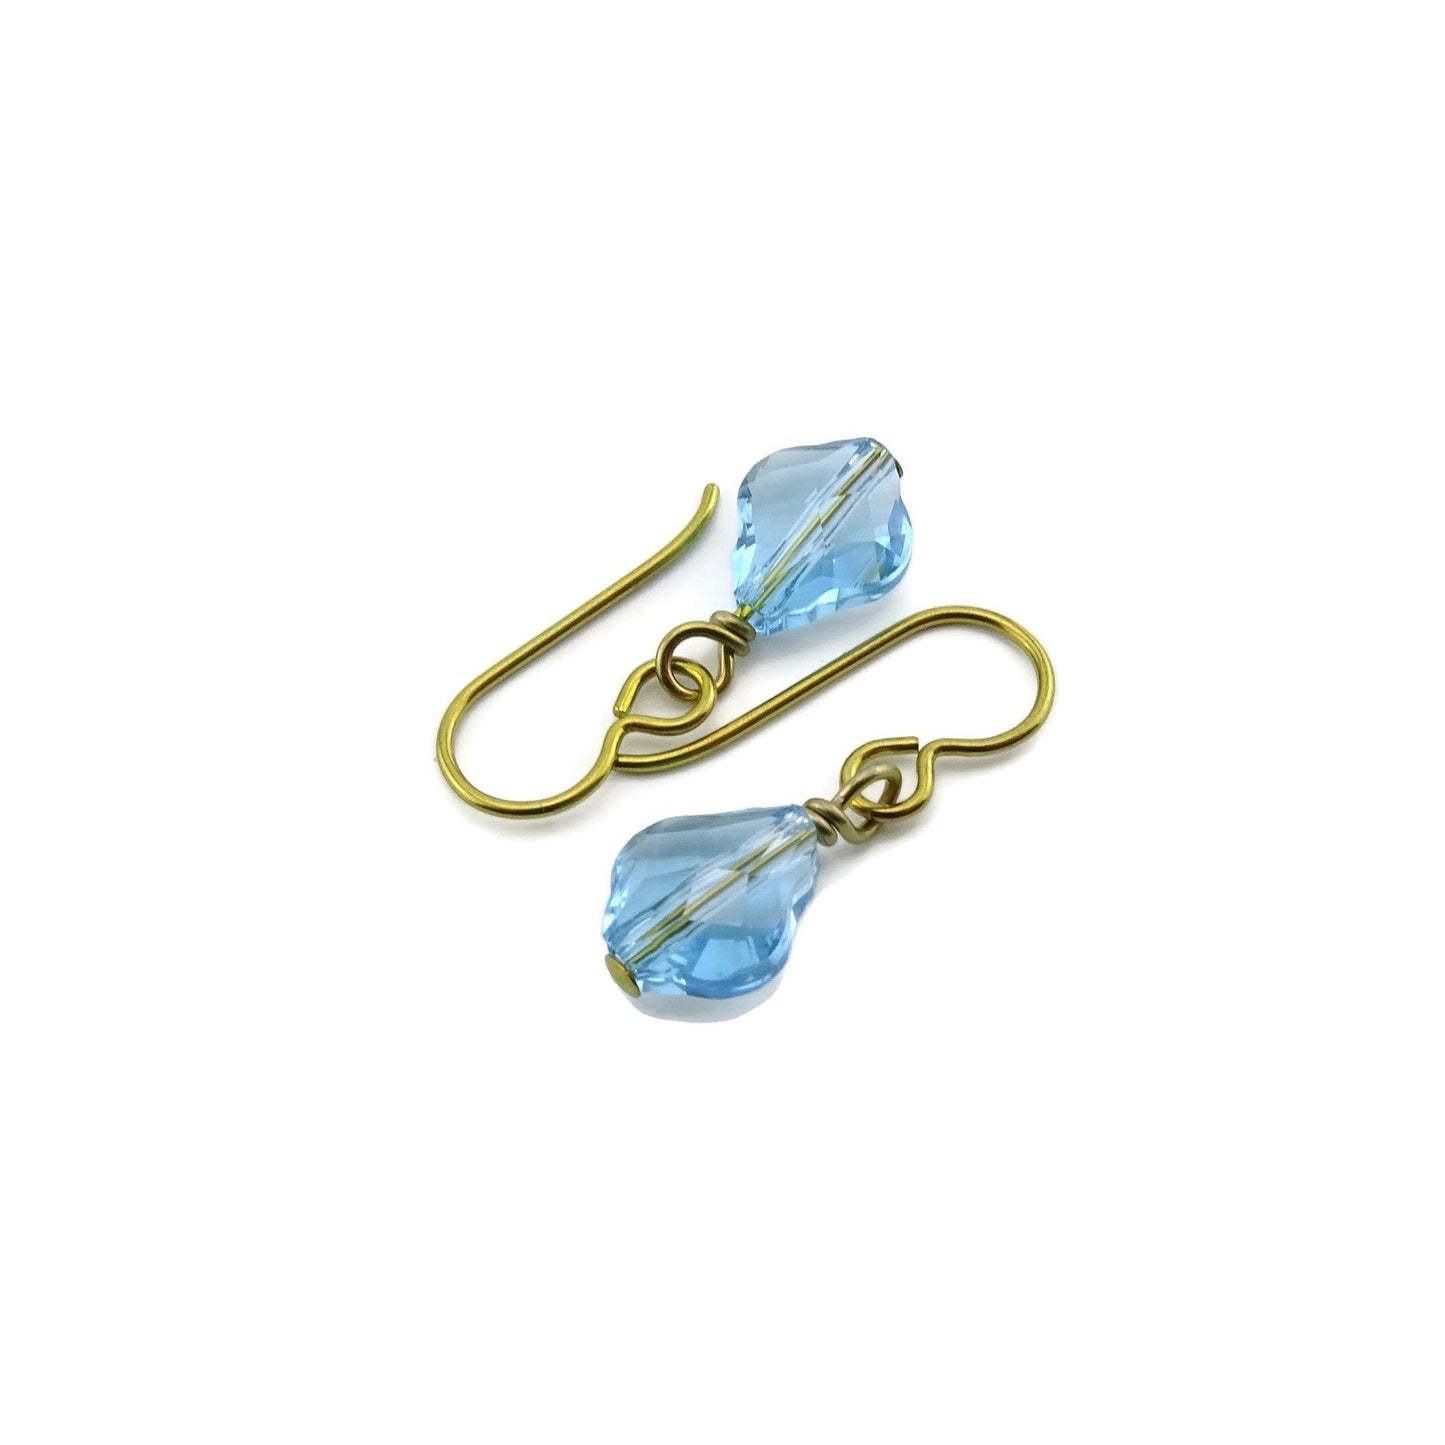 Aquamarine Crystal Earrings, Gold Niobium Earrings for Sensitive Ears, Light Blue Baroque Swarovski Crystal, Hypoallergenic and Nickel Free